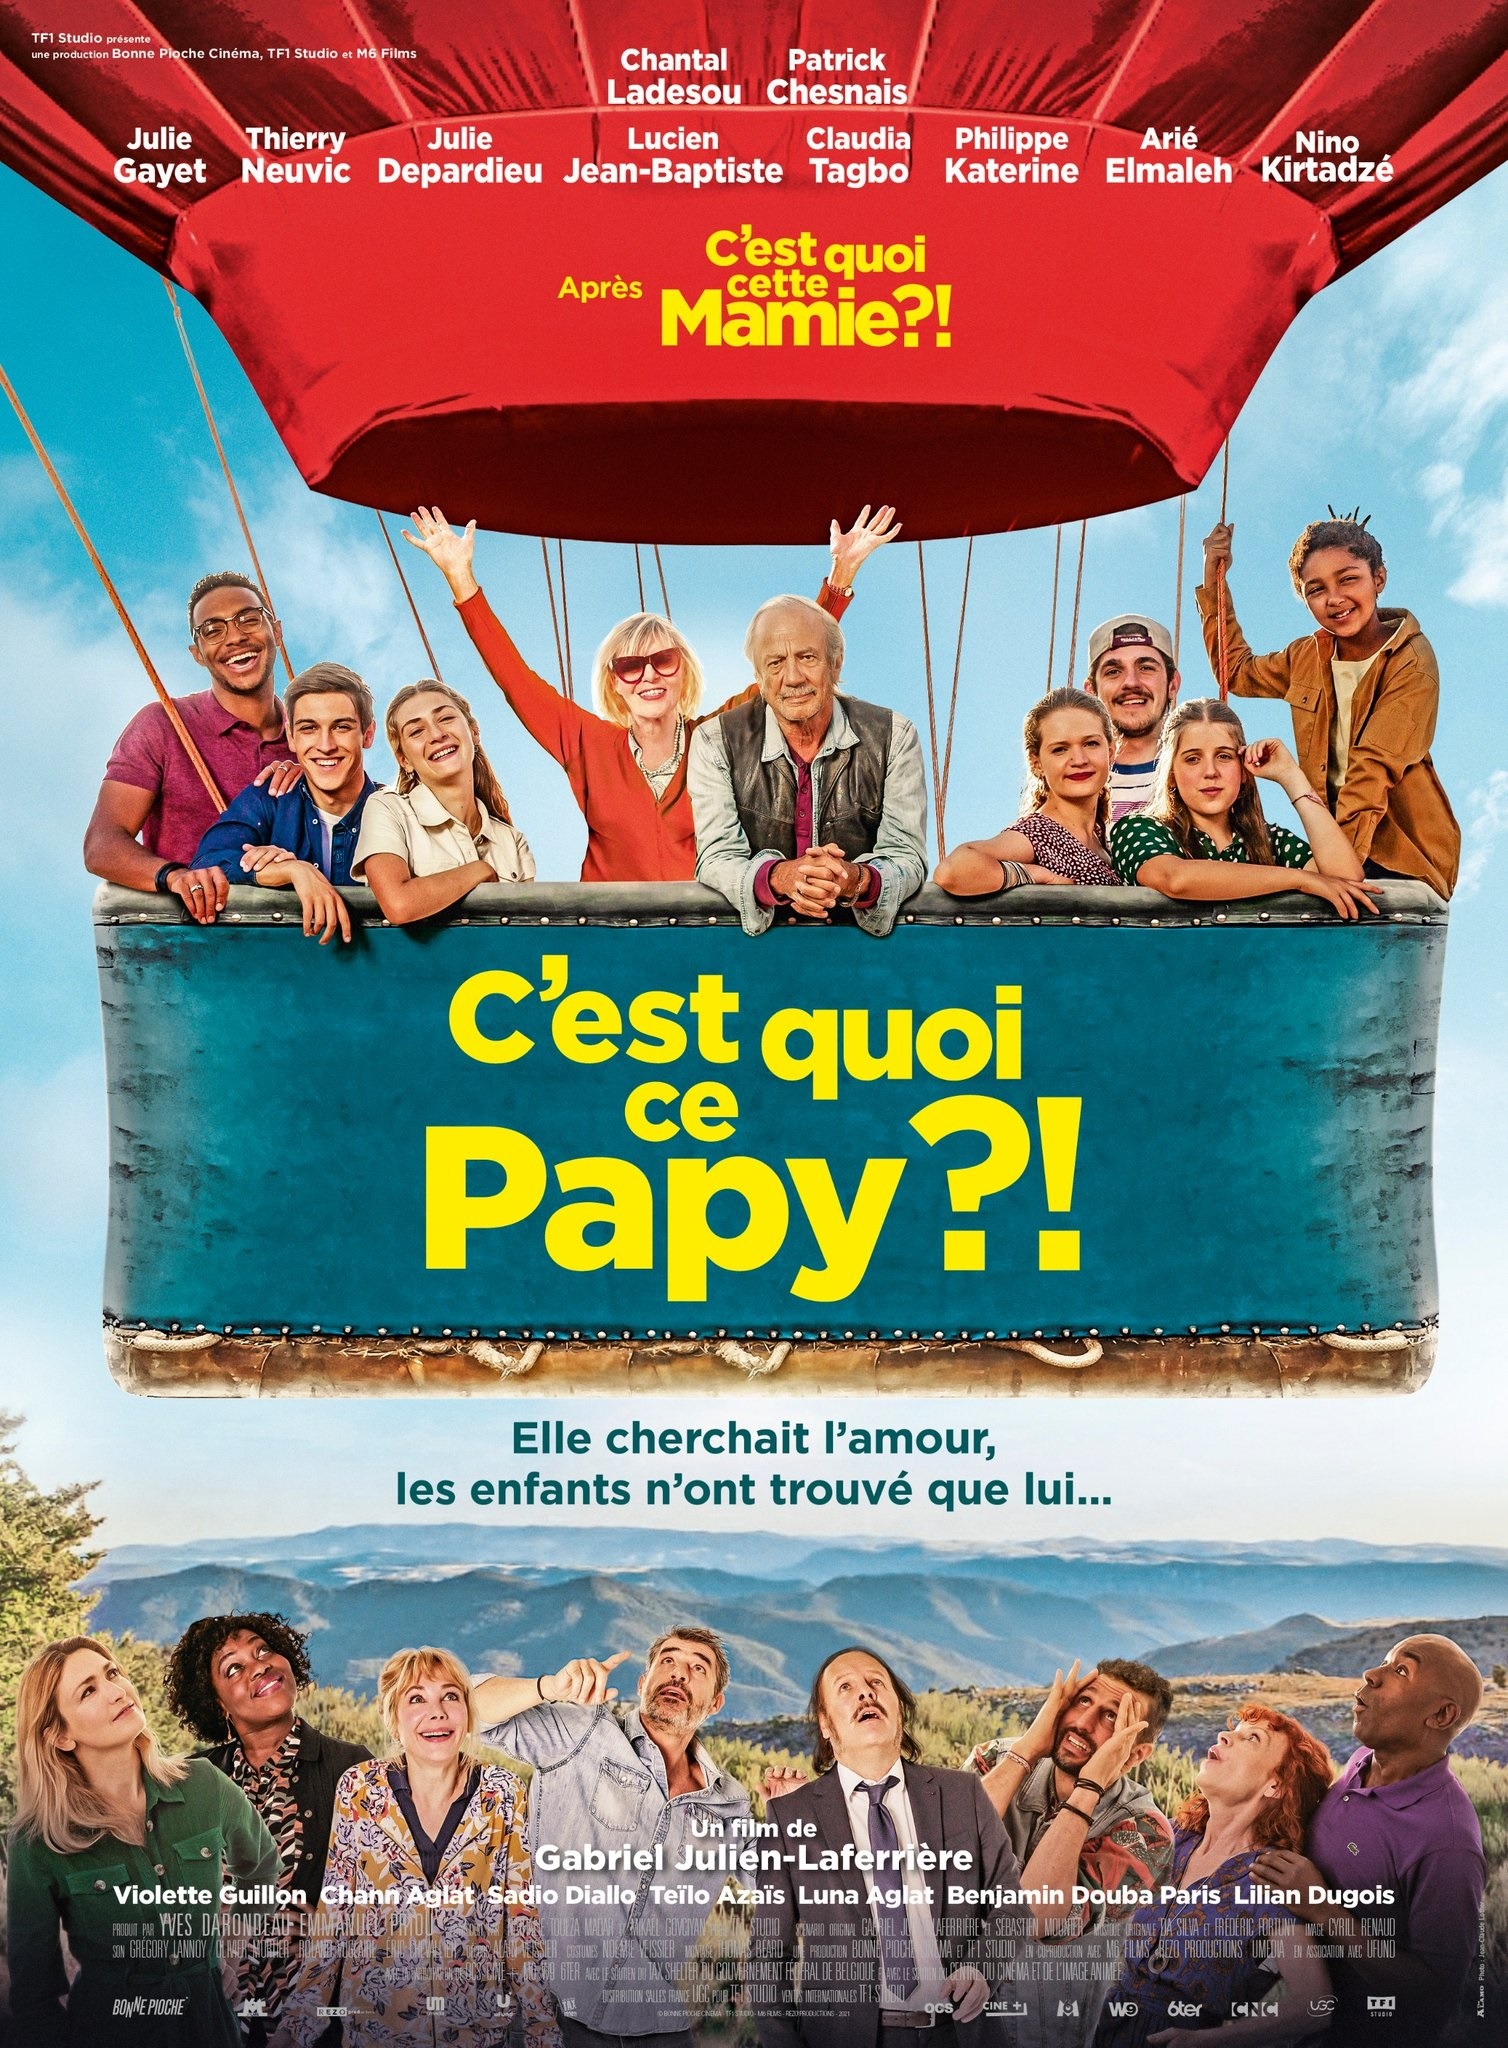 Mega Sized Movie Poster Image for C'est quoi ce papy?! 